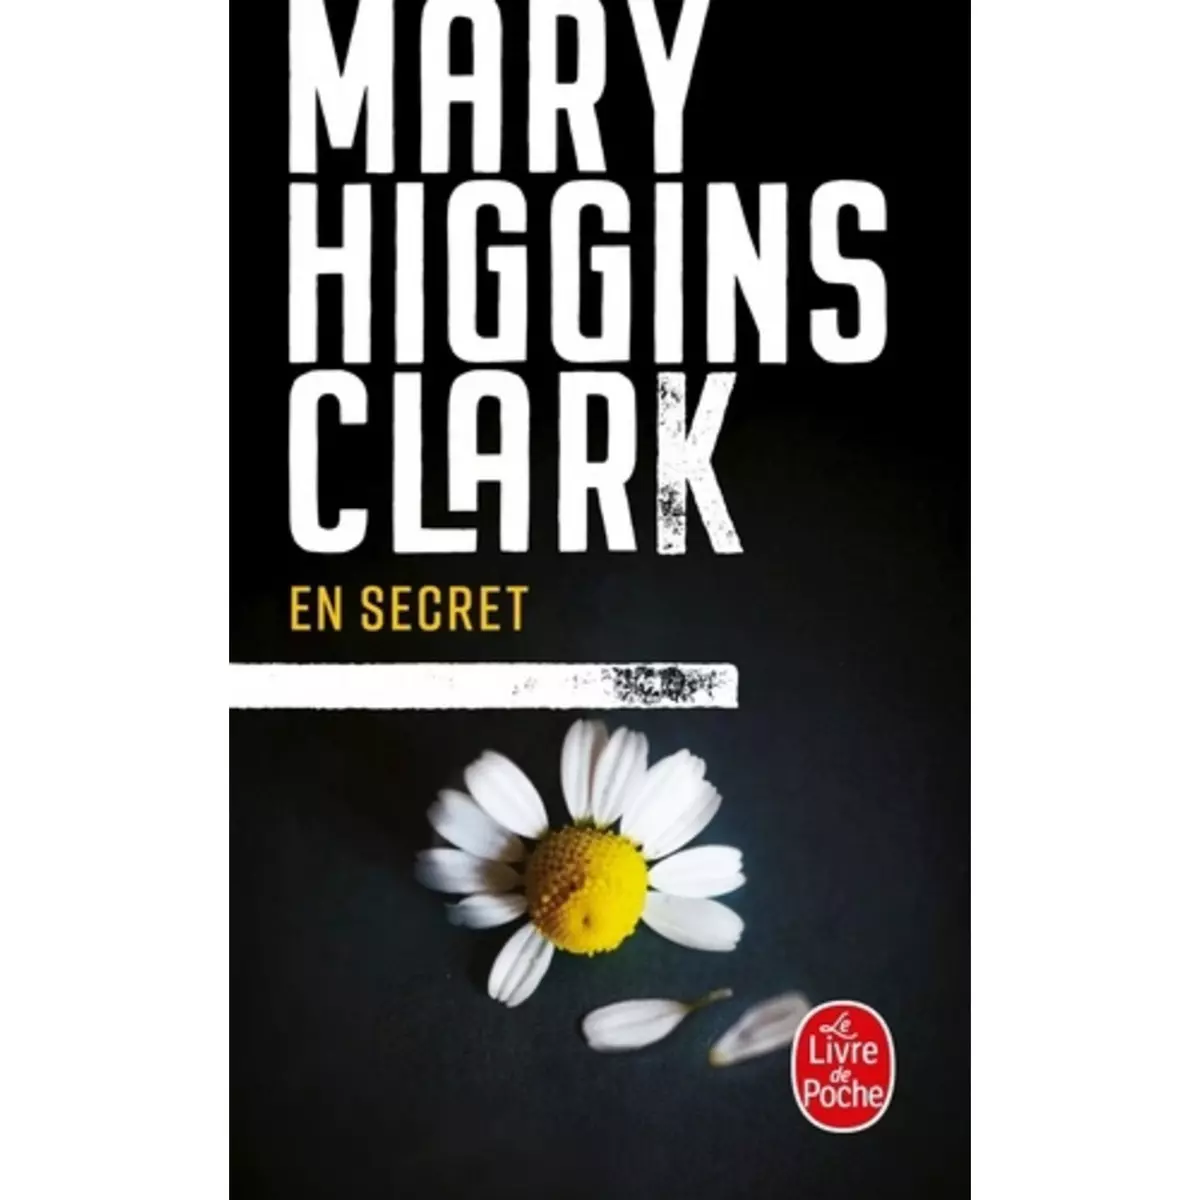  EN SECRET, Higgins Clark Mary